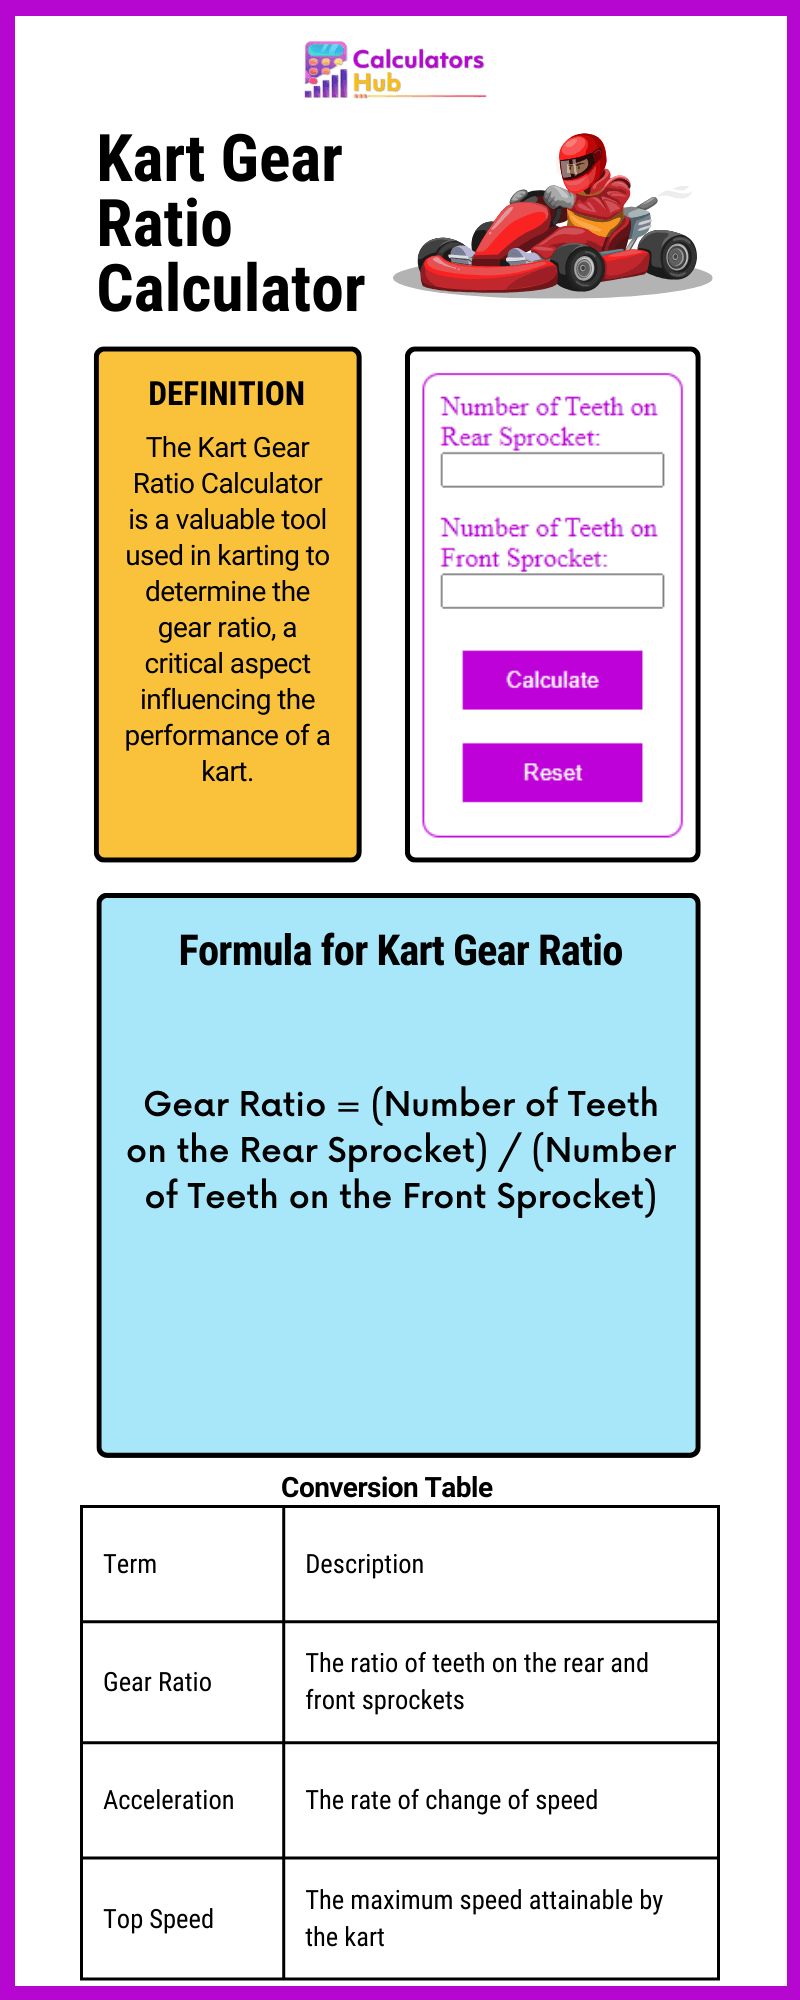 Kart Gear Ratio Calculator